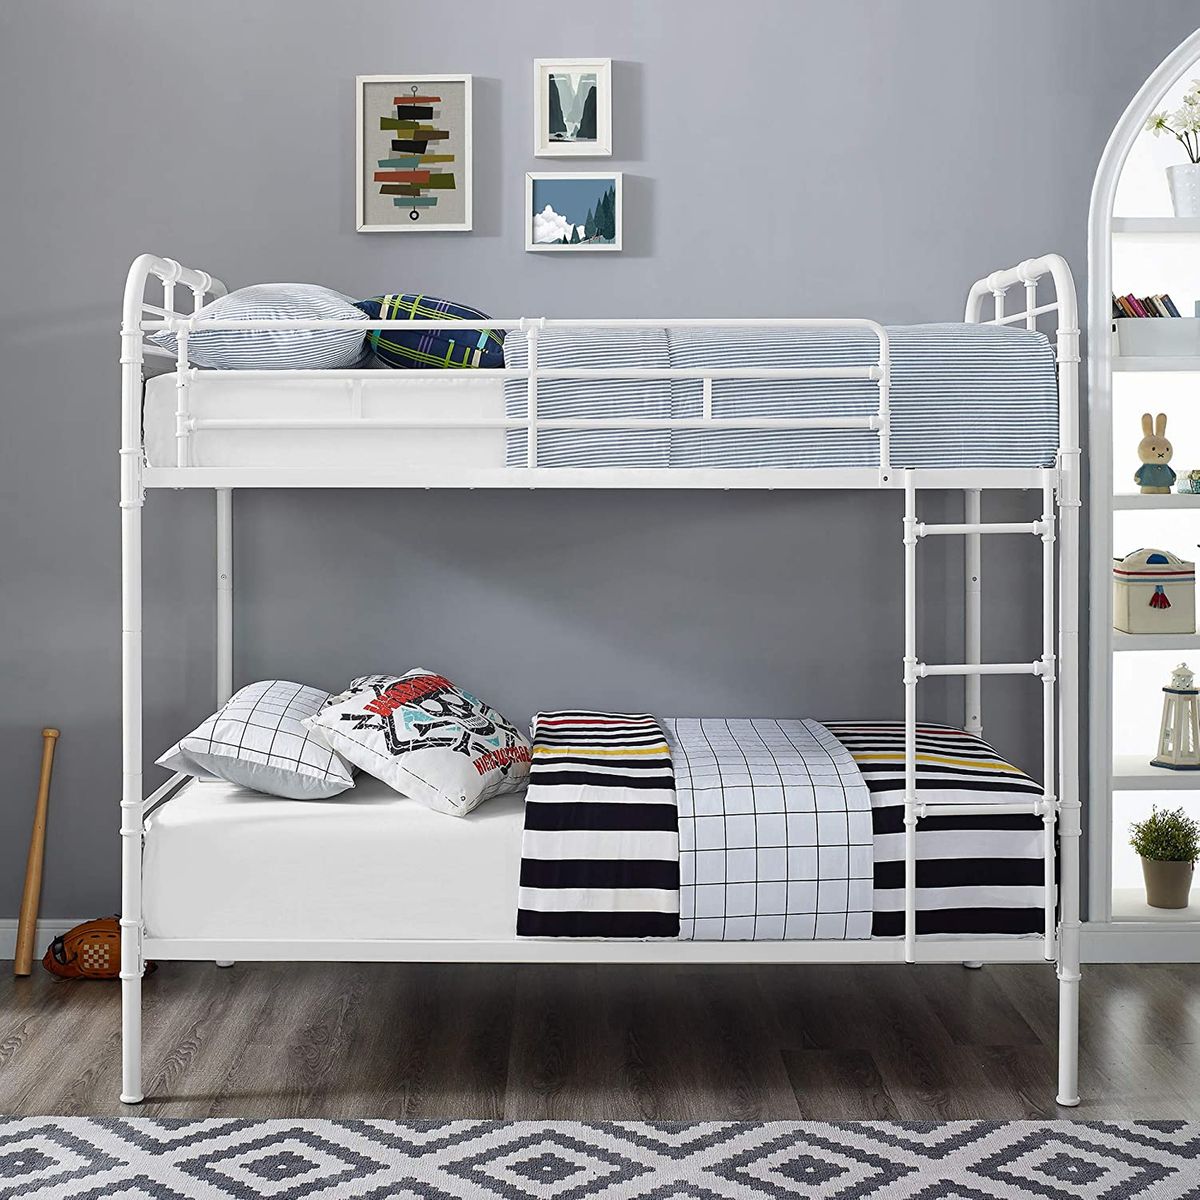 8 Best Bunk Beds 2020 The Strategist, Full Size Bunk Bed Frame